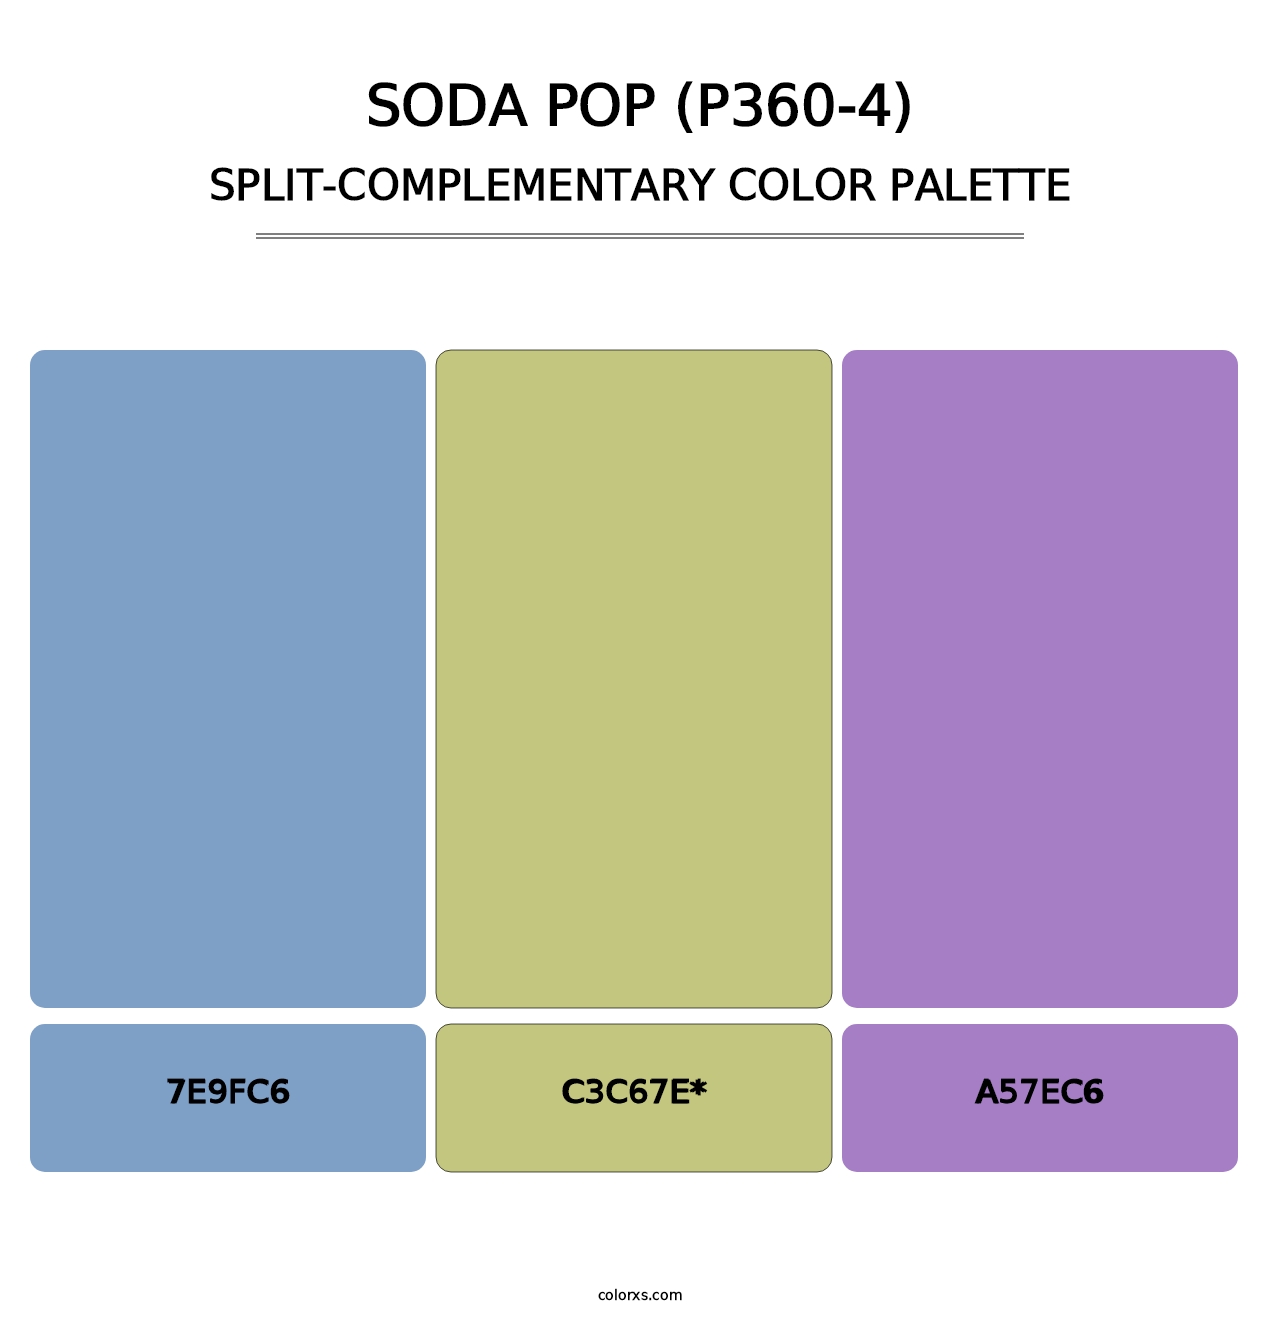 Soda Pop (P360-4) - Split-Complementary Color Palette